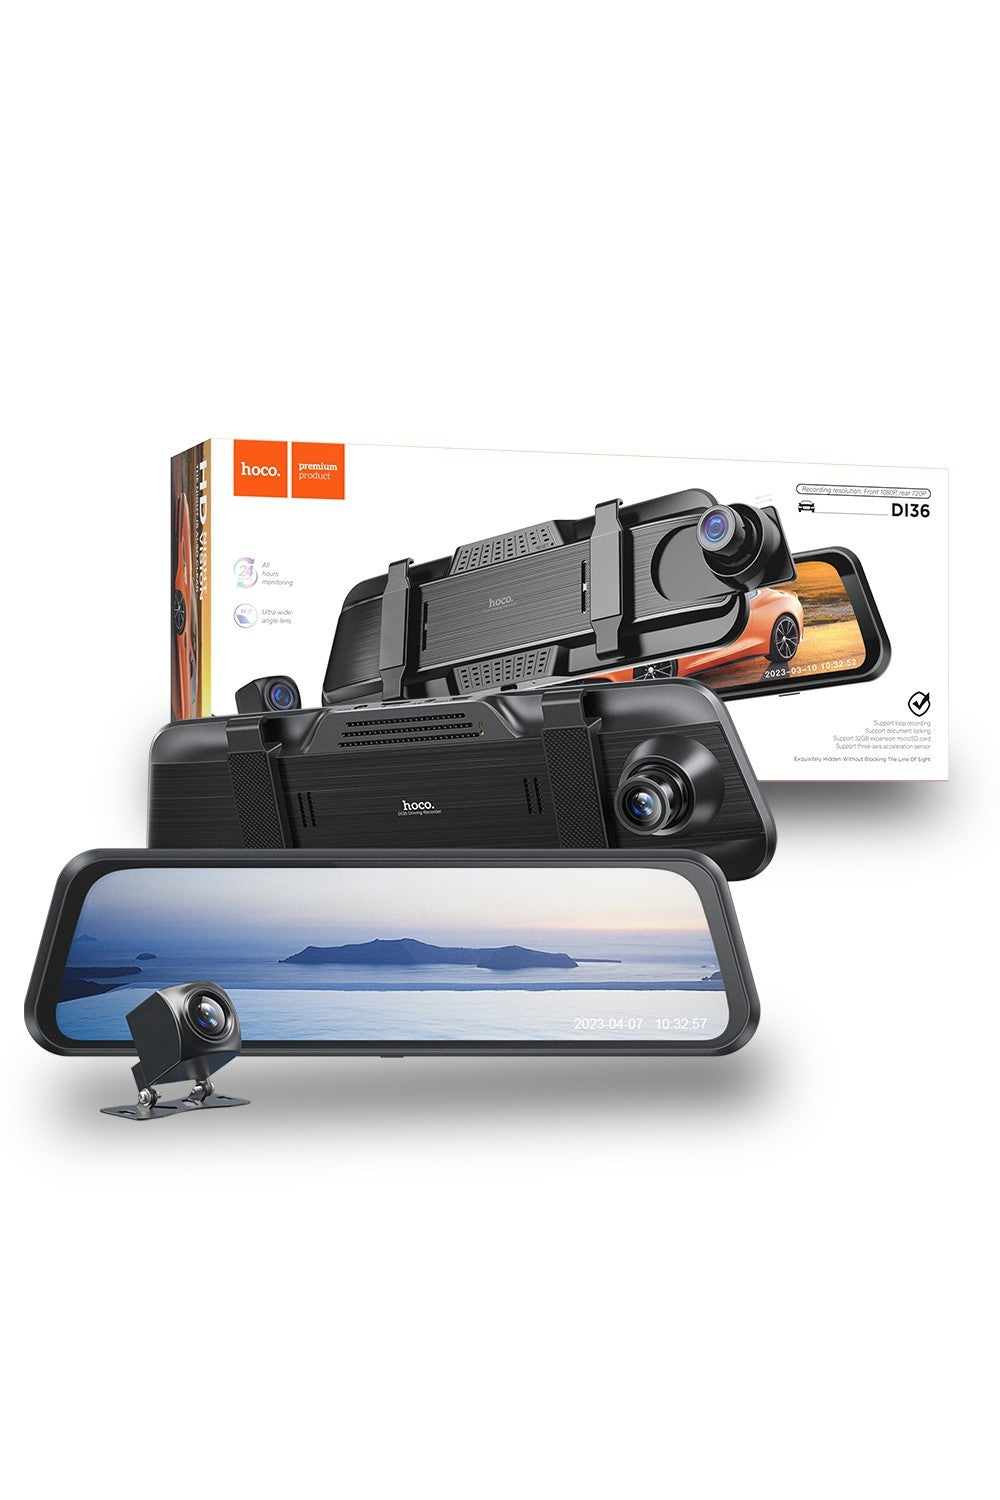 Hoco Car Camera Driving Recorder Dashcam Rearview Mirror Front + Rear DI36